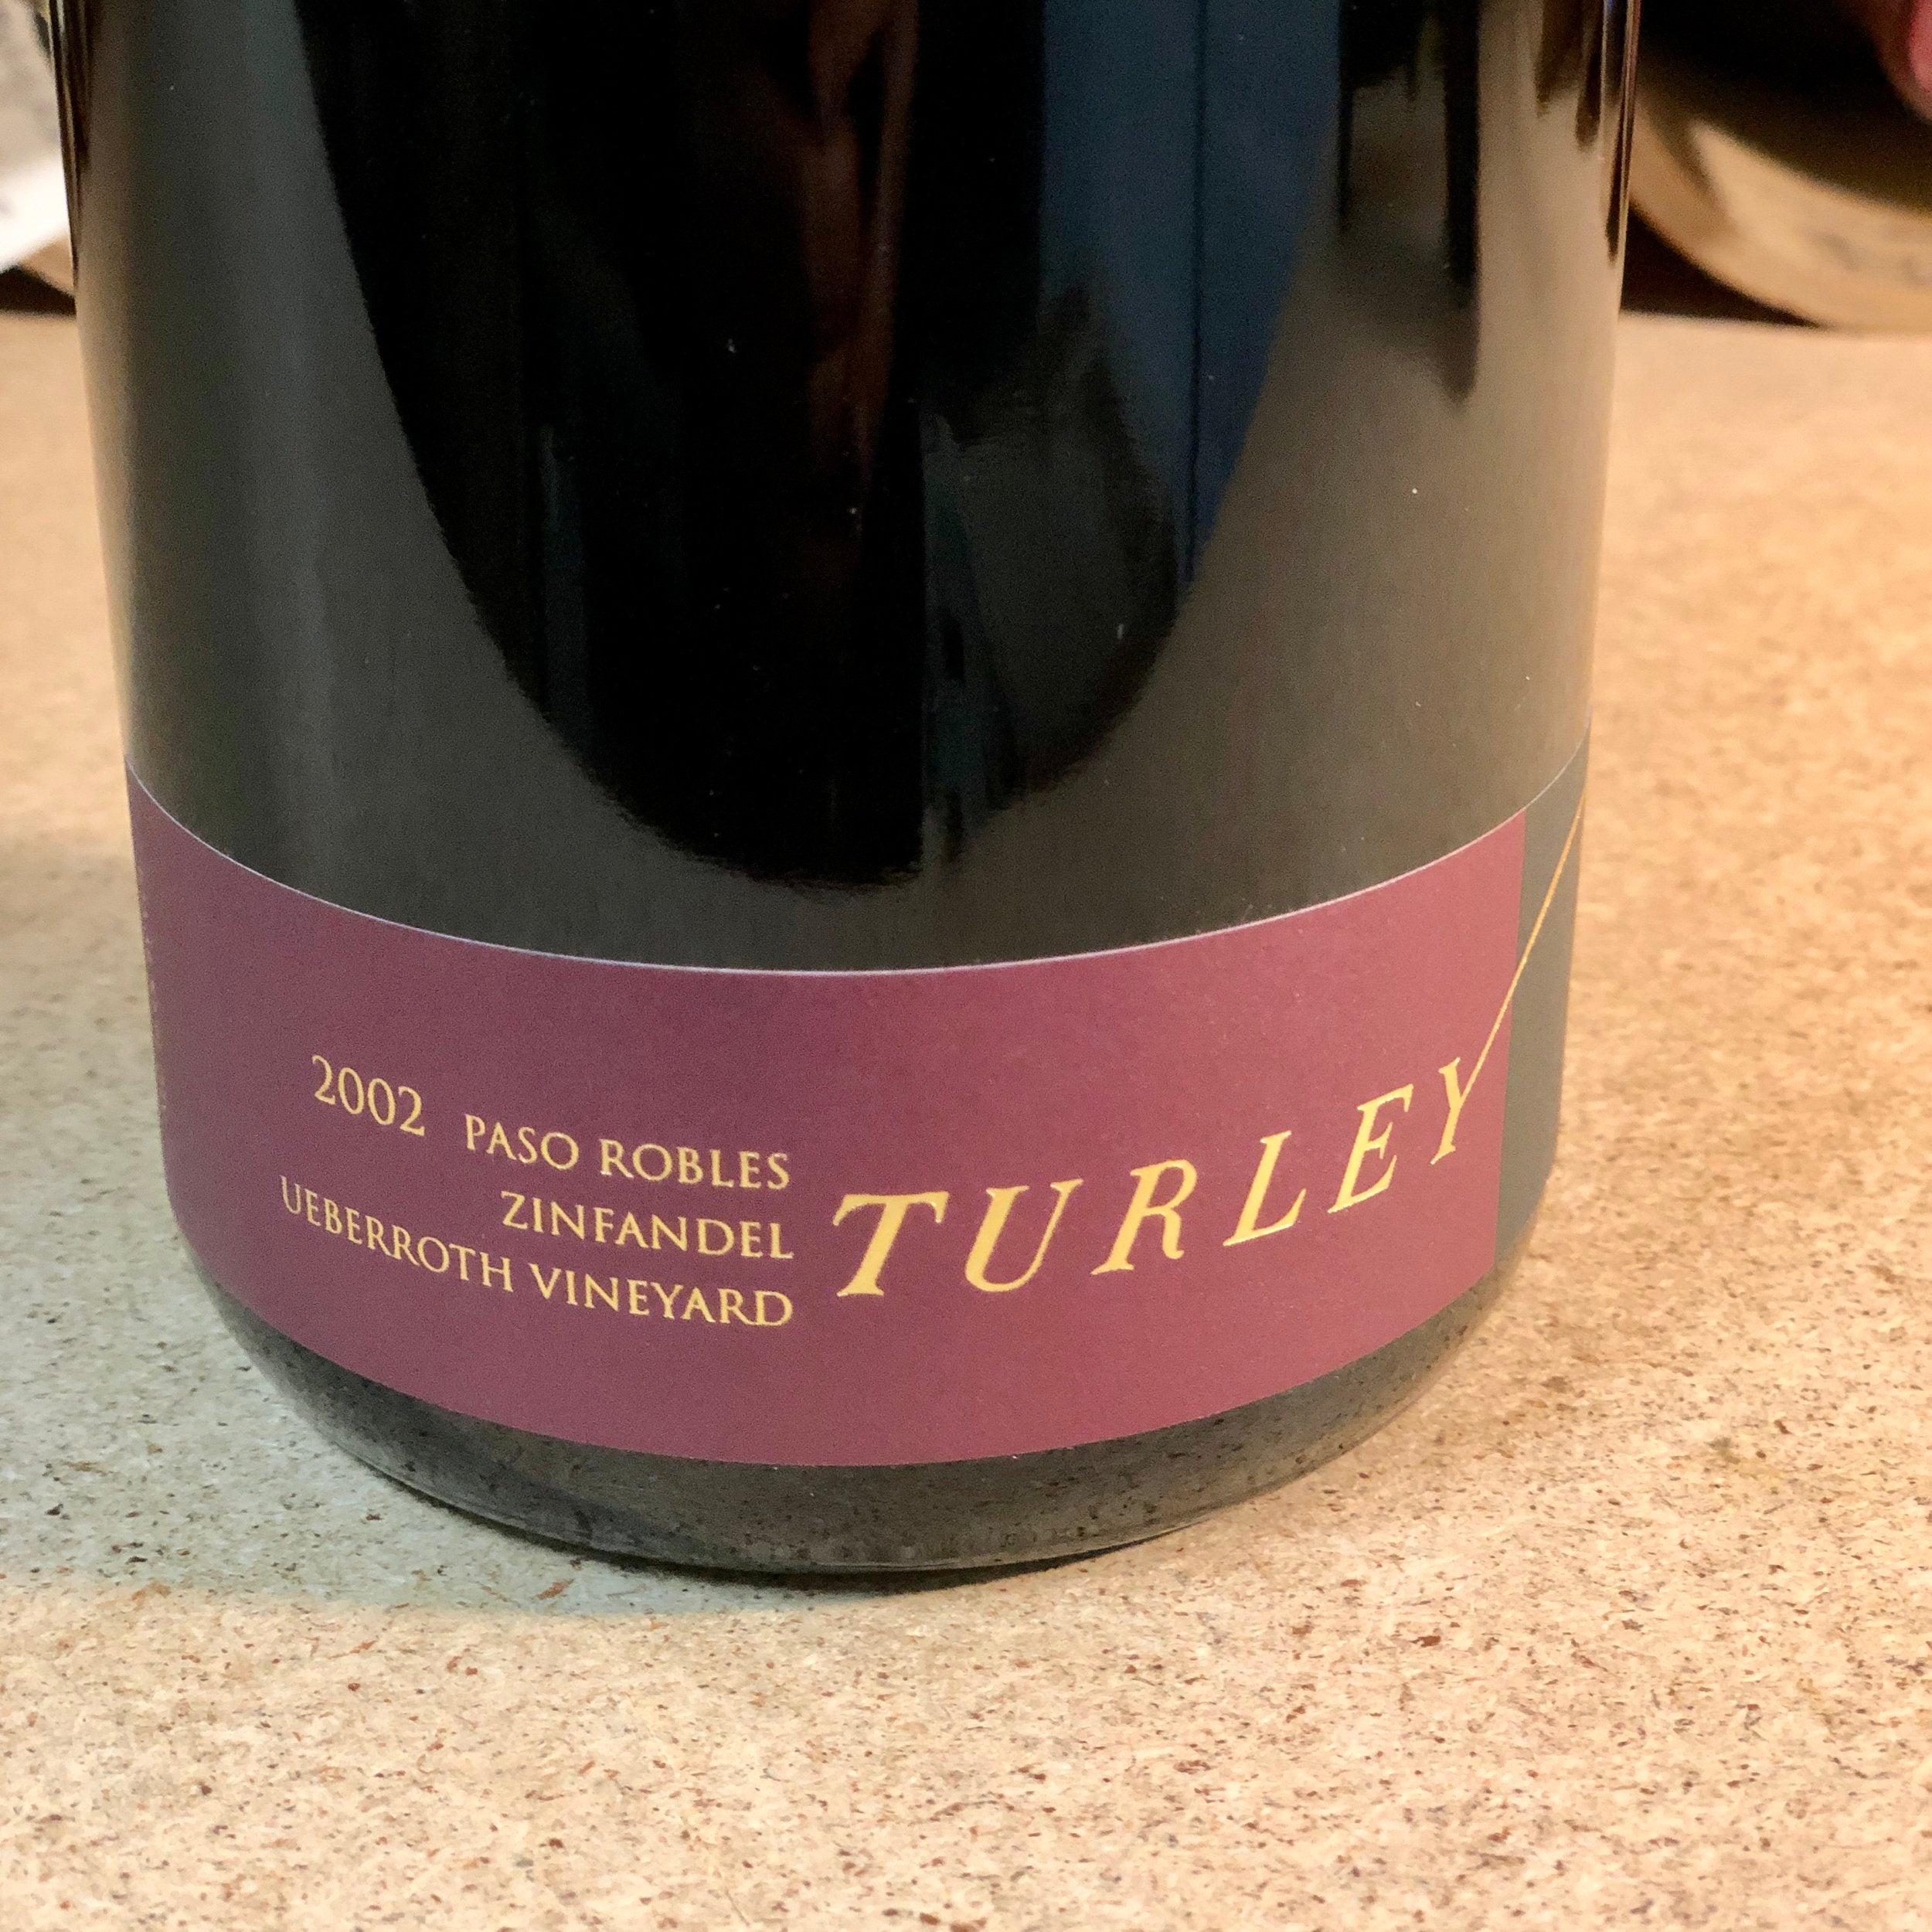 Turley, Paso Robles, Ueberroth Vineyard, Zinfandel 2002